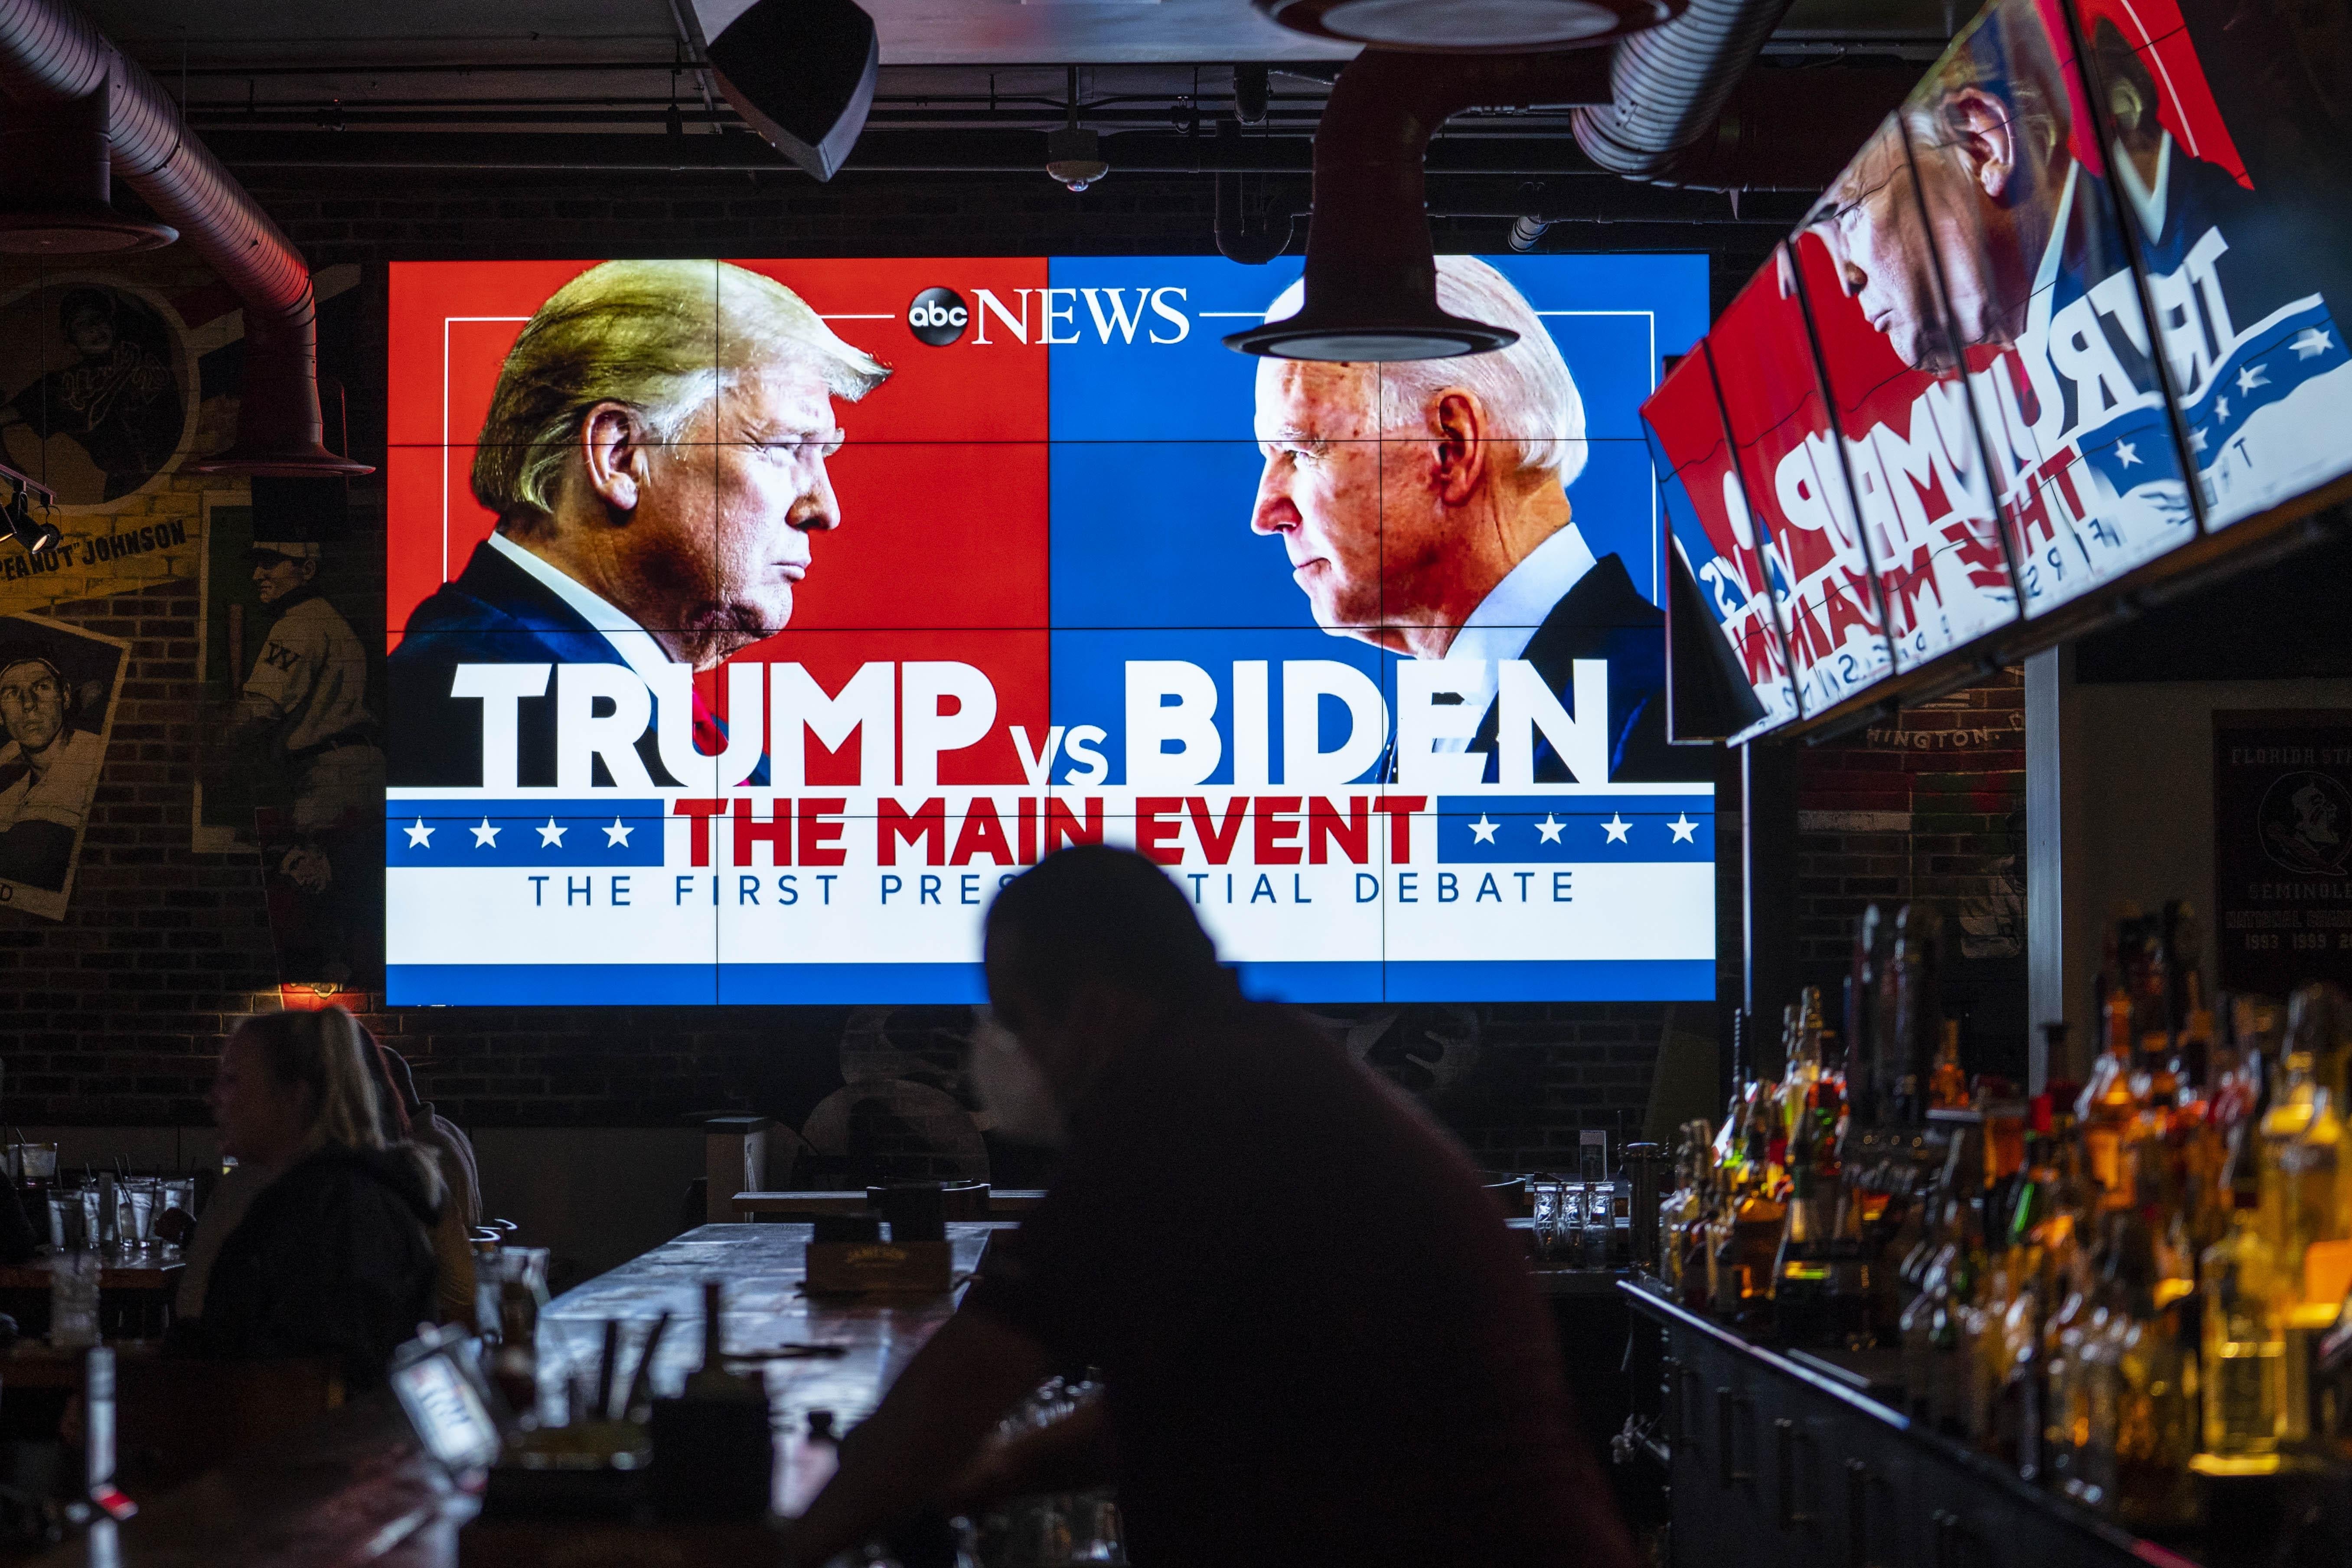 A giant TV screen in a bar promotes the first "Trump vs. Biden" presidential debate.